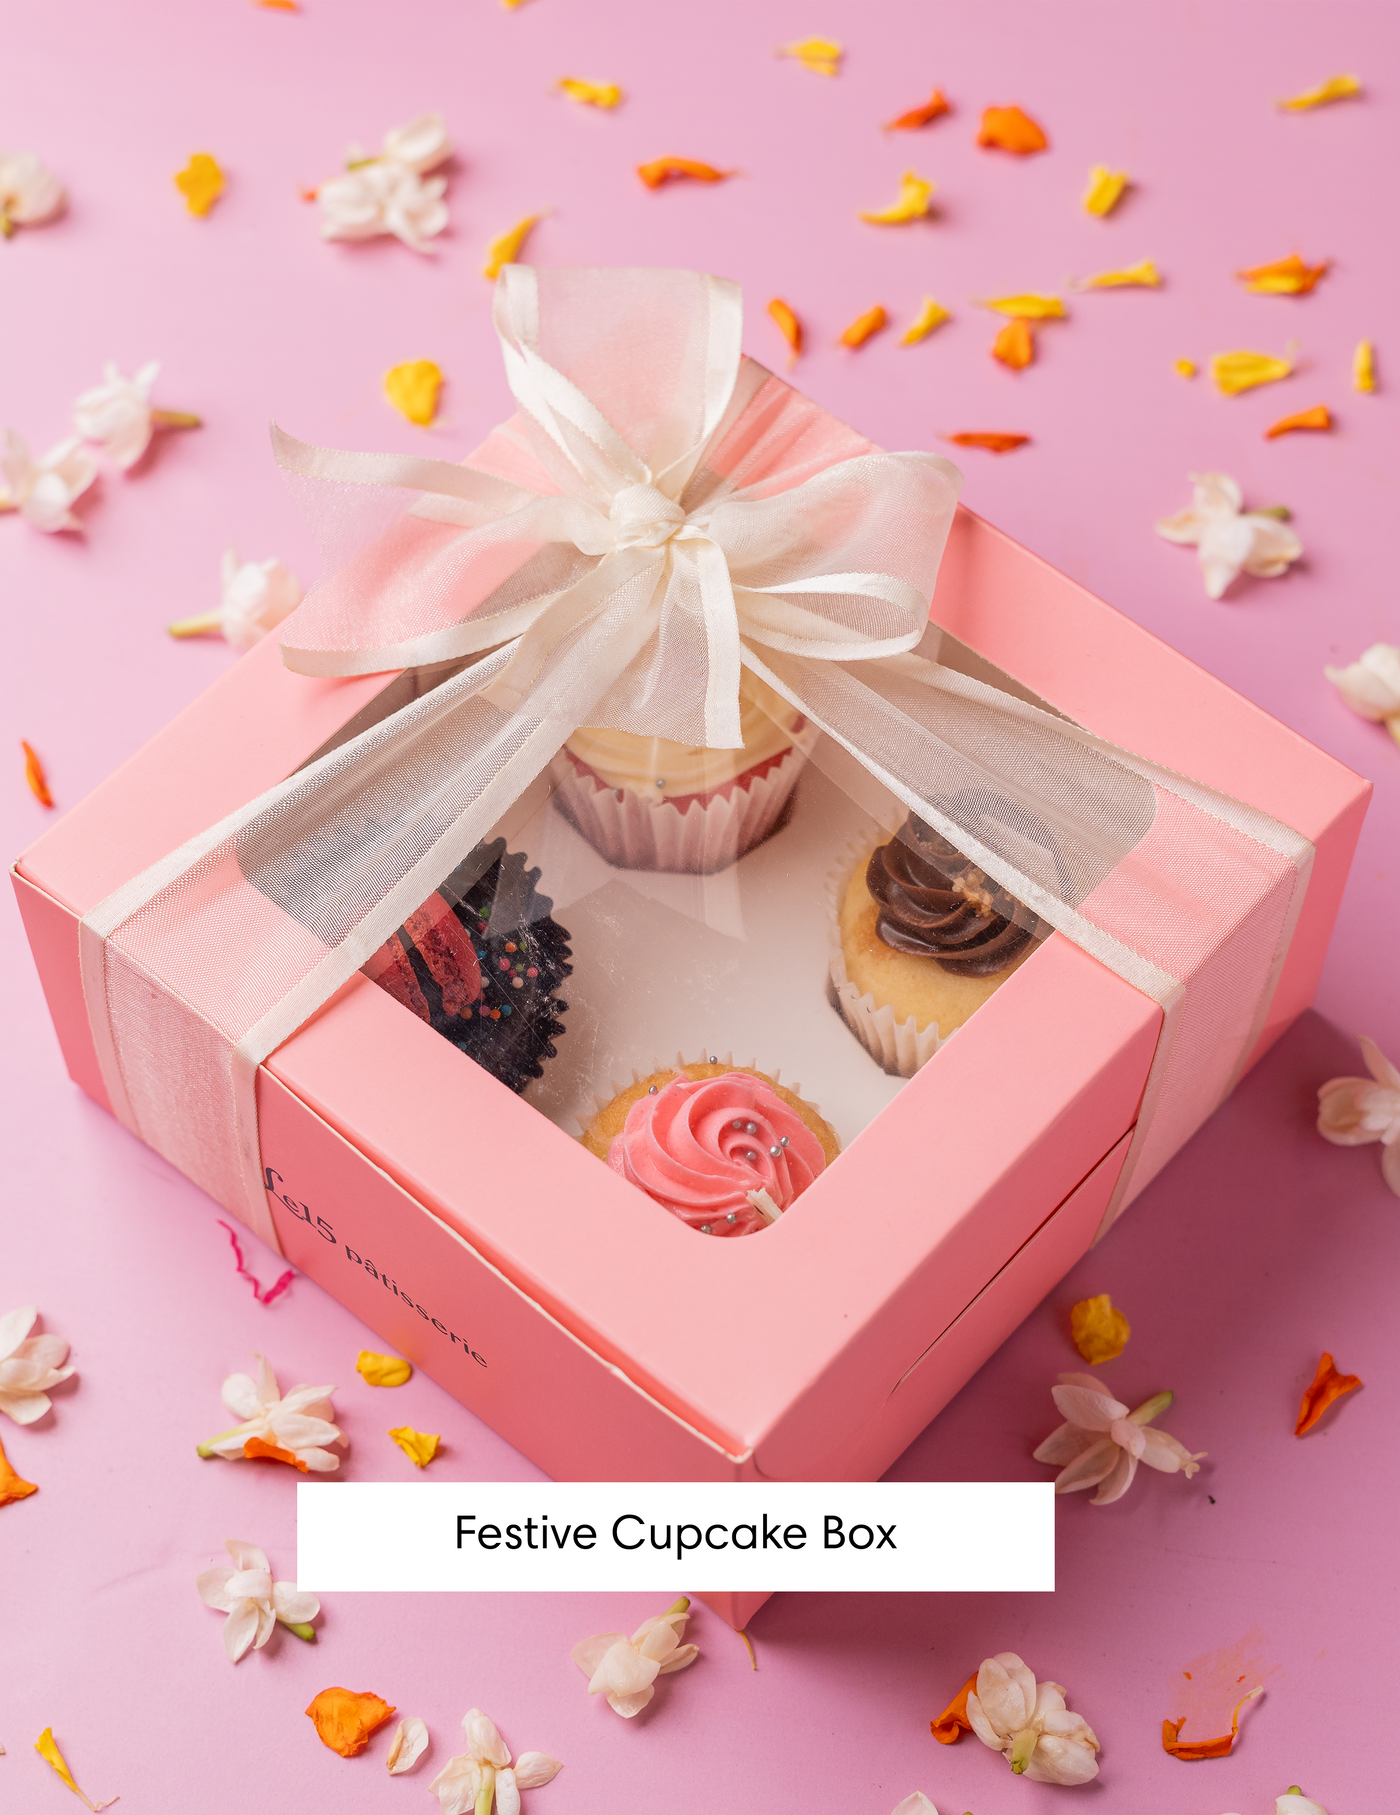 Festive Cupcake Box